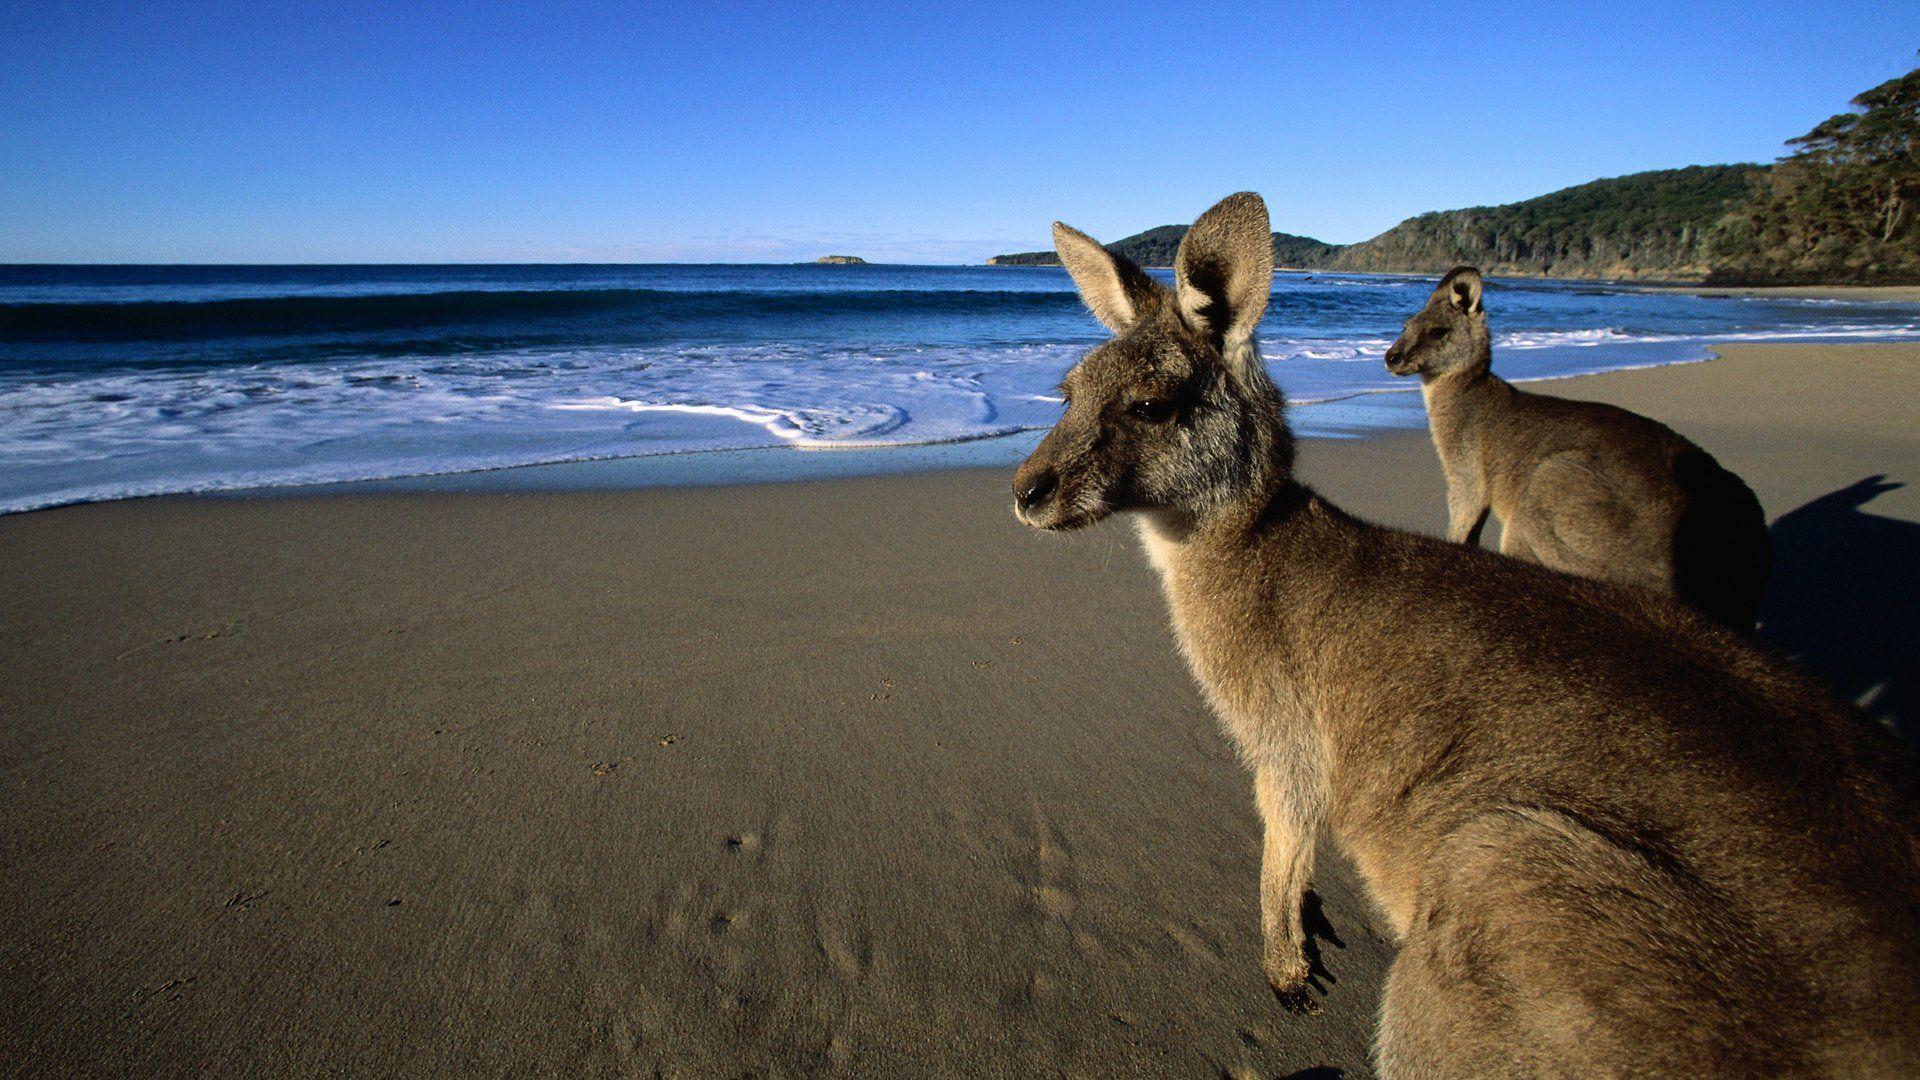 Kangaroo HD Wallpaper and Background Image